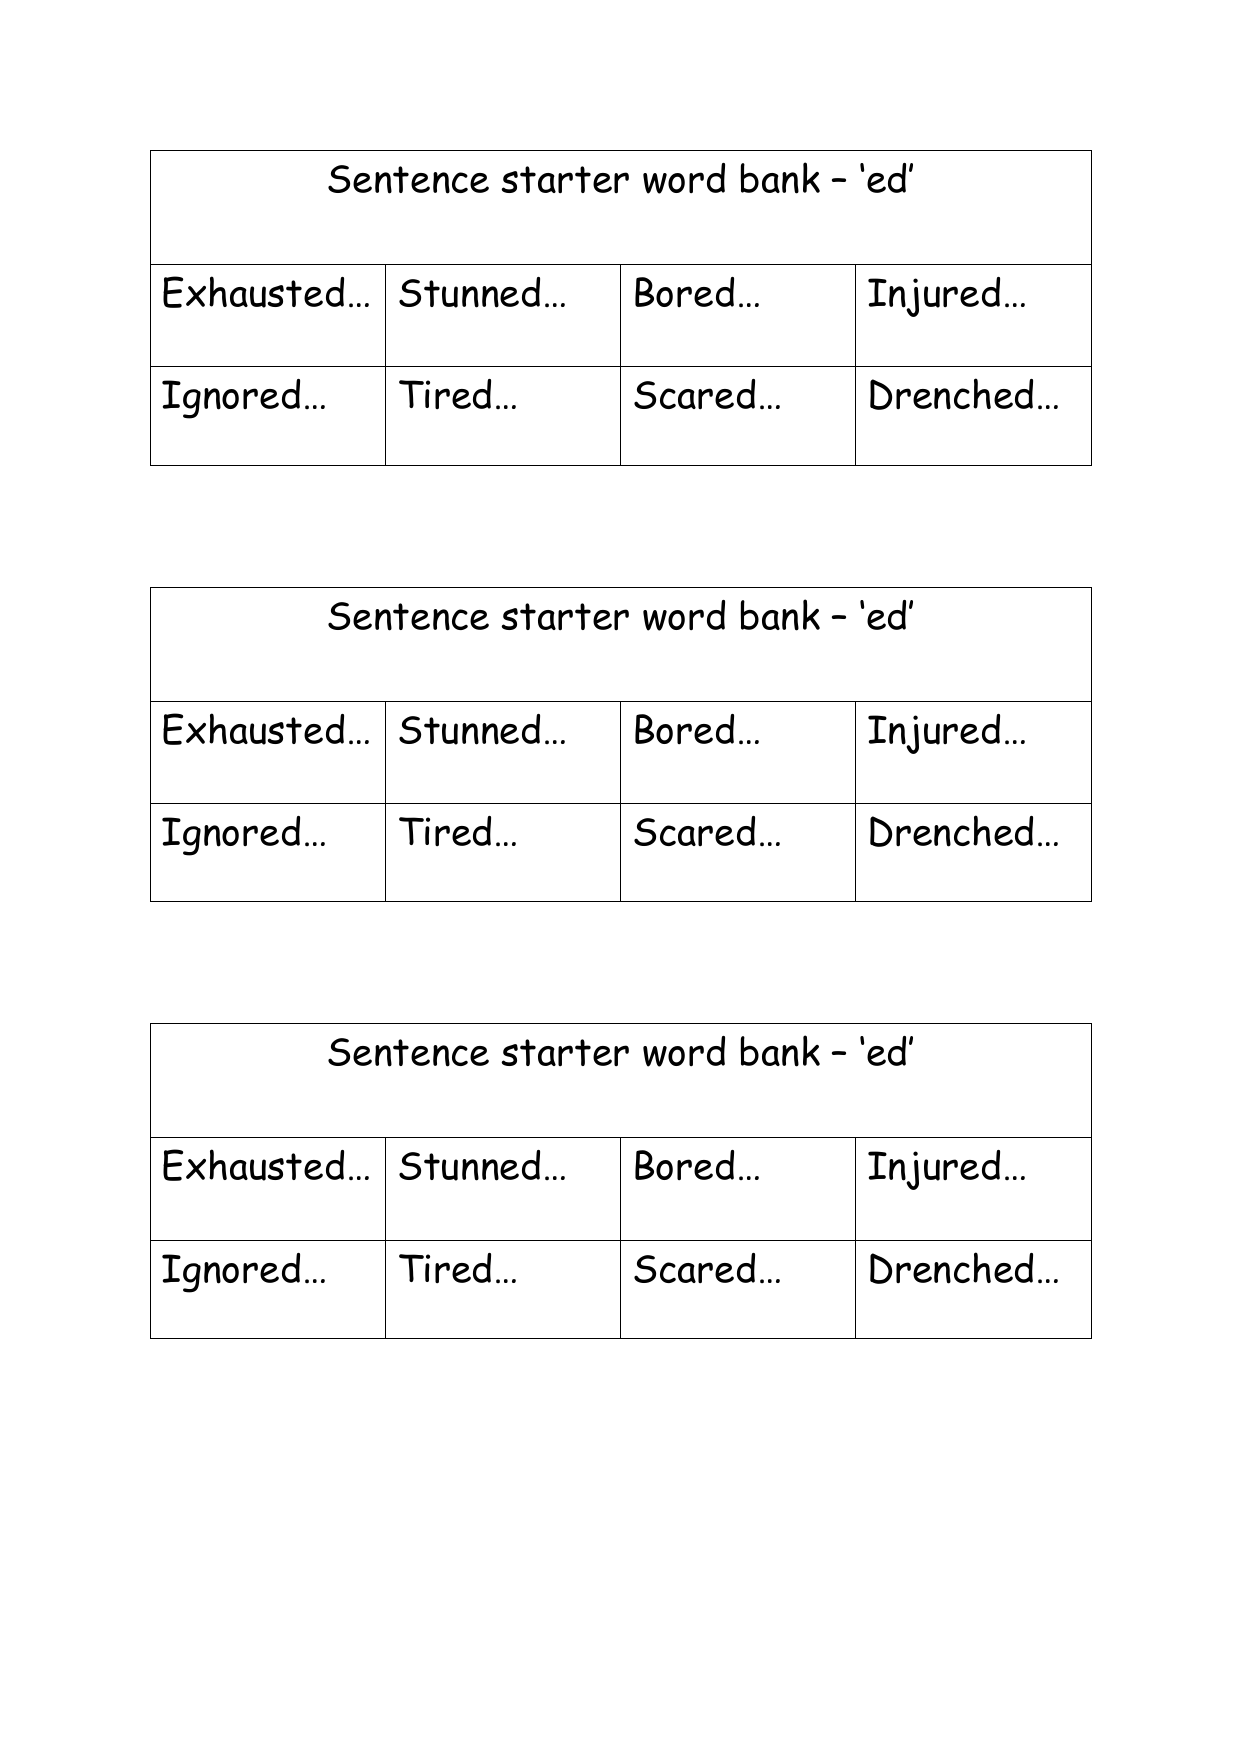 sentence-starter-word-bank-differentiated-ed-irregular-verbs-past-progressive-verbs